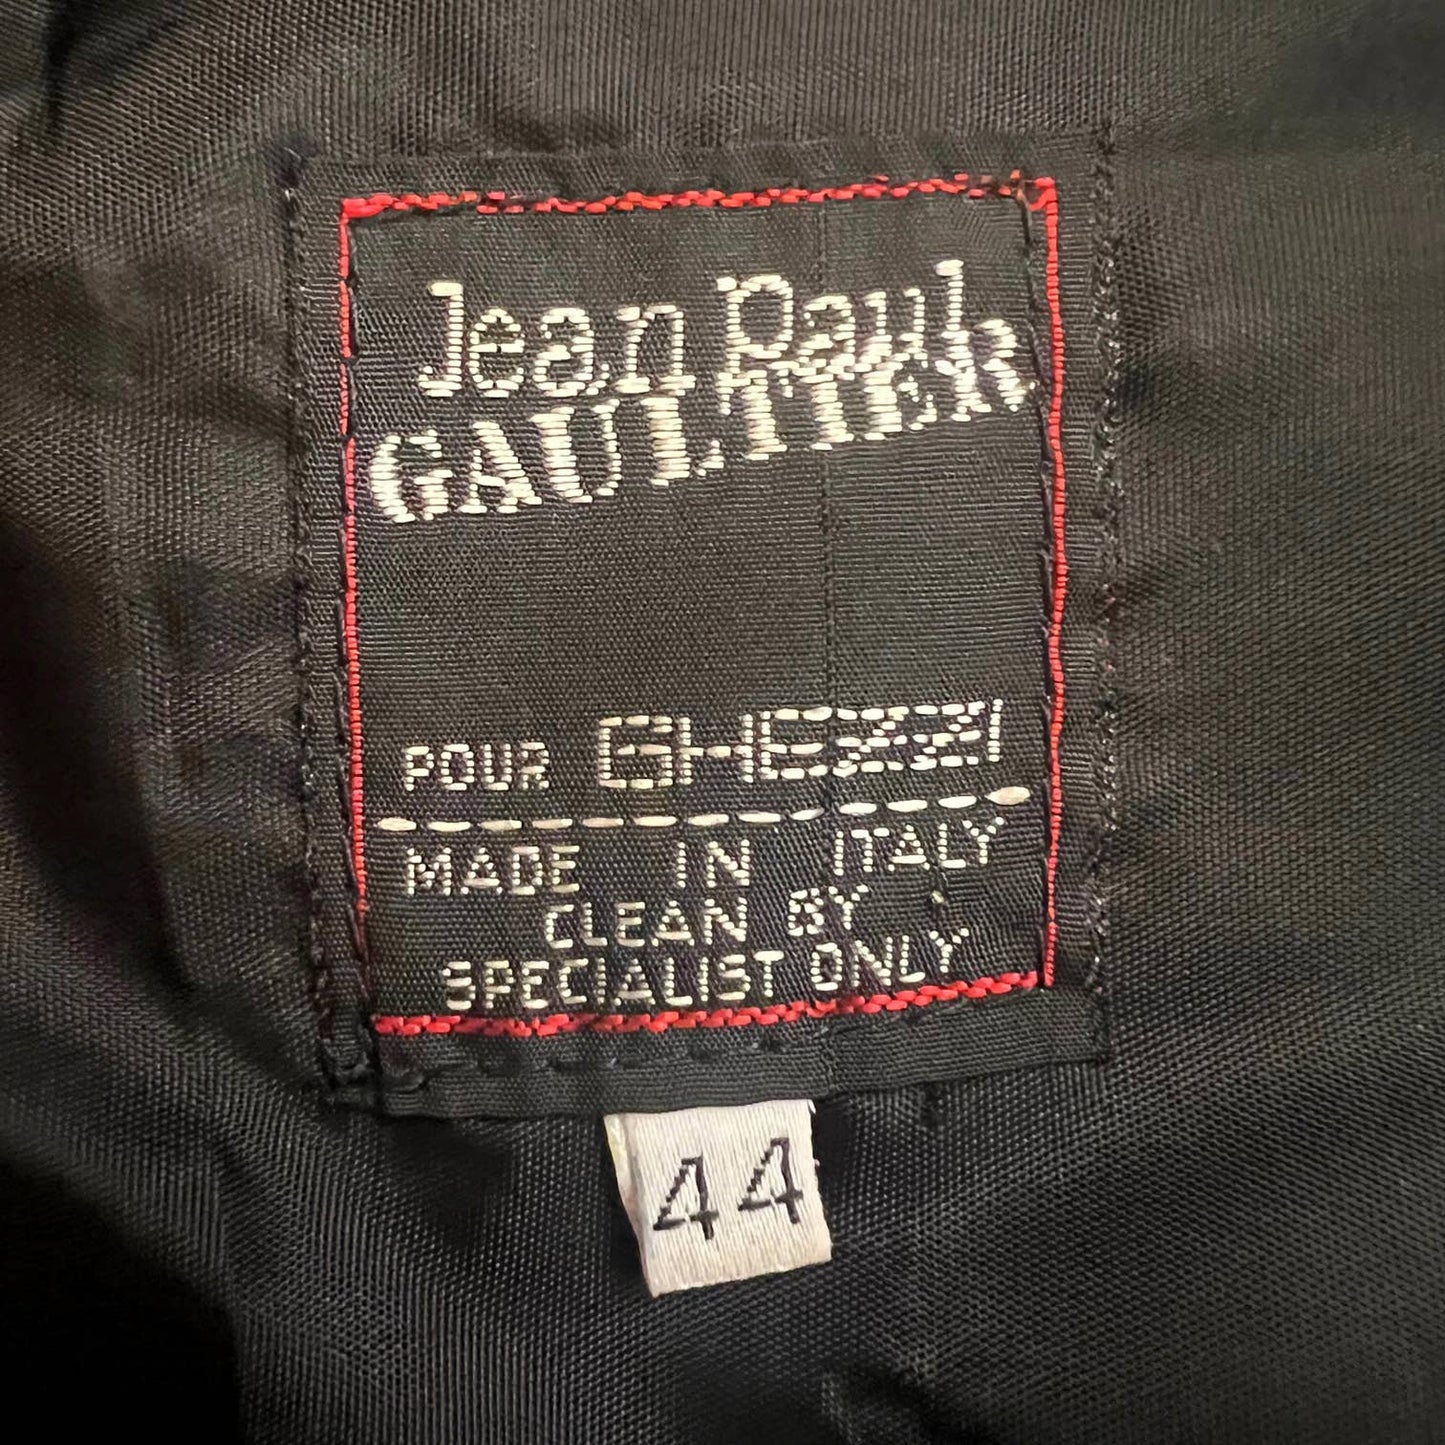 JEAN PAUL GAULTIER Vintage Black Leather Skirt with Lace Hem Skirt